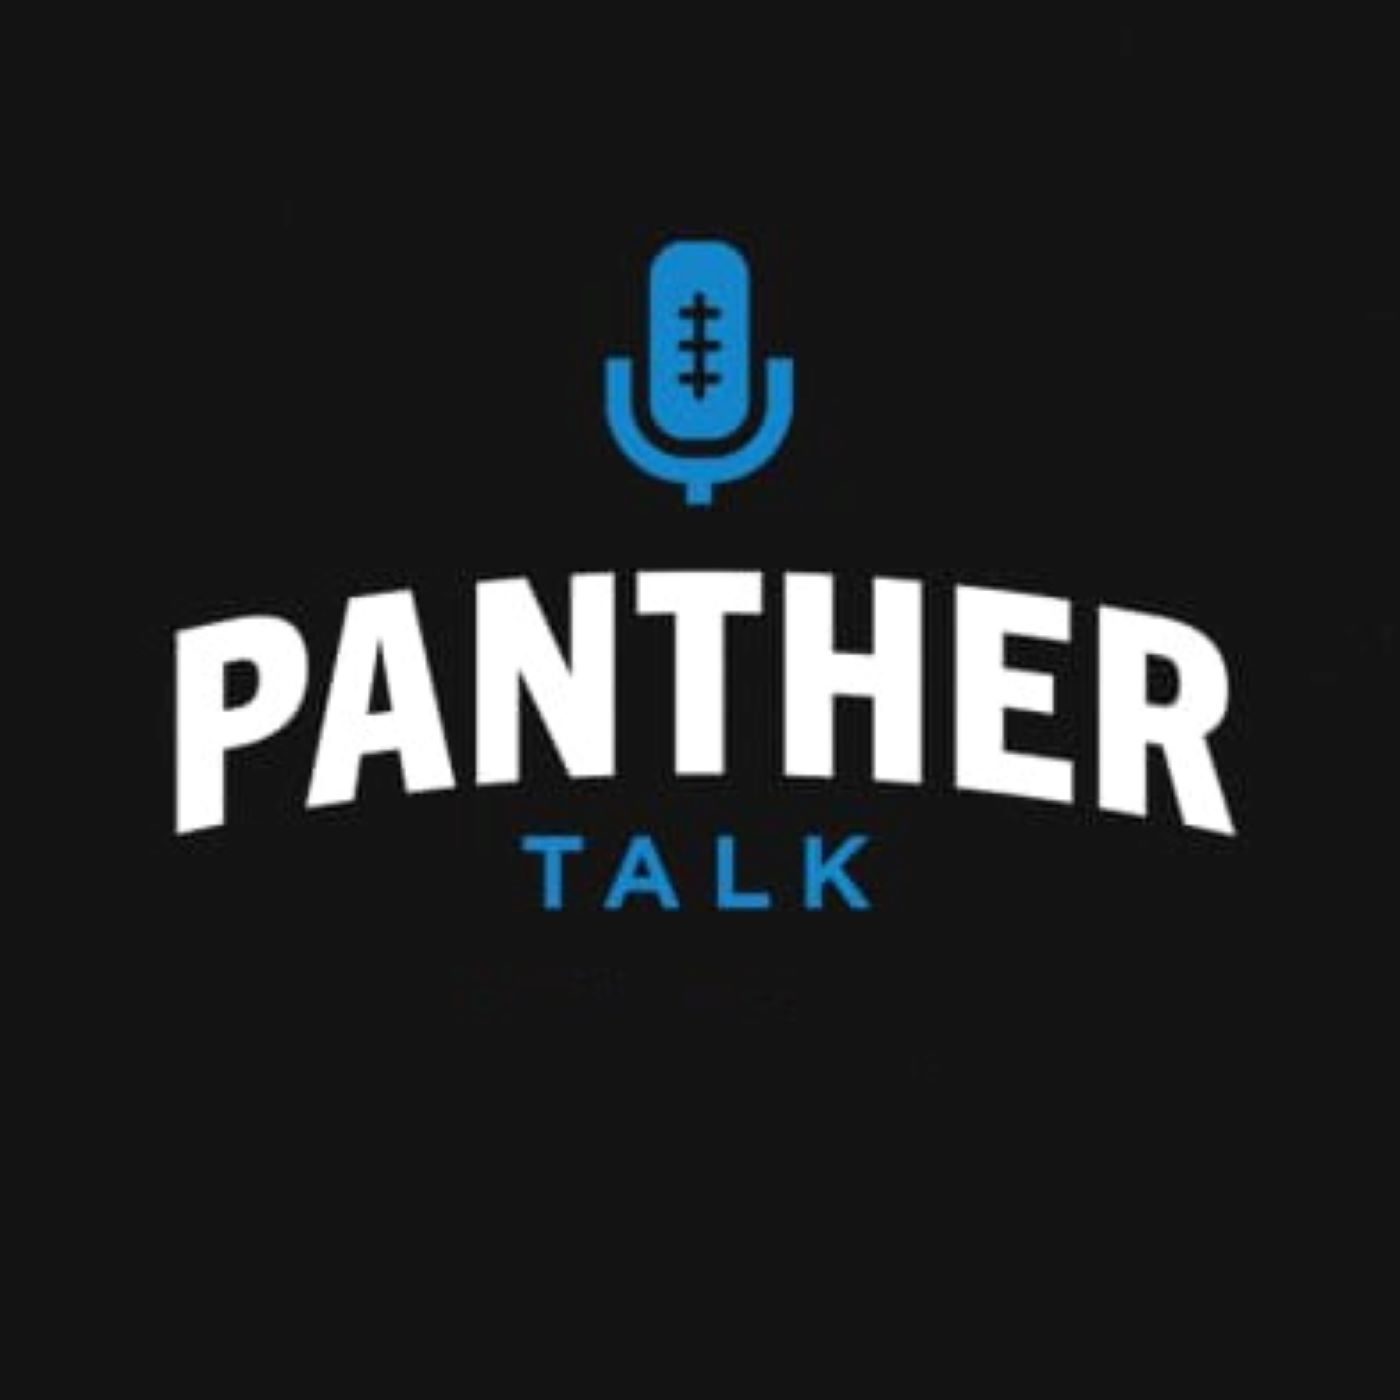 Panther Talk (November 27th)